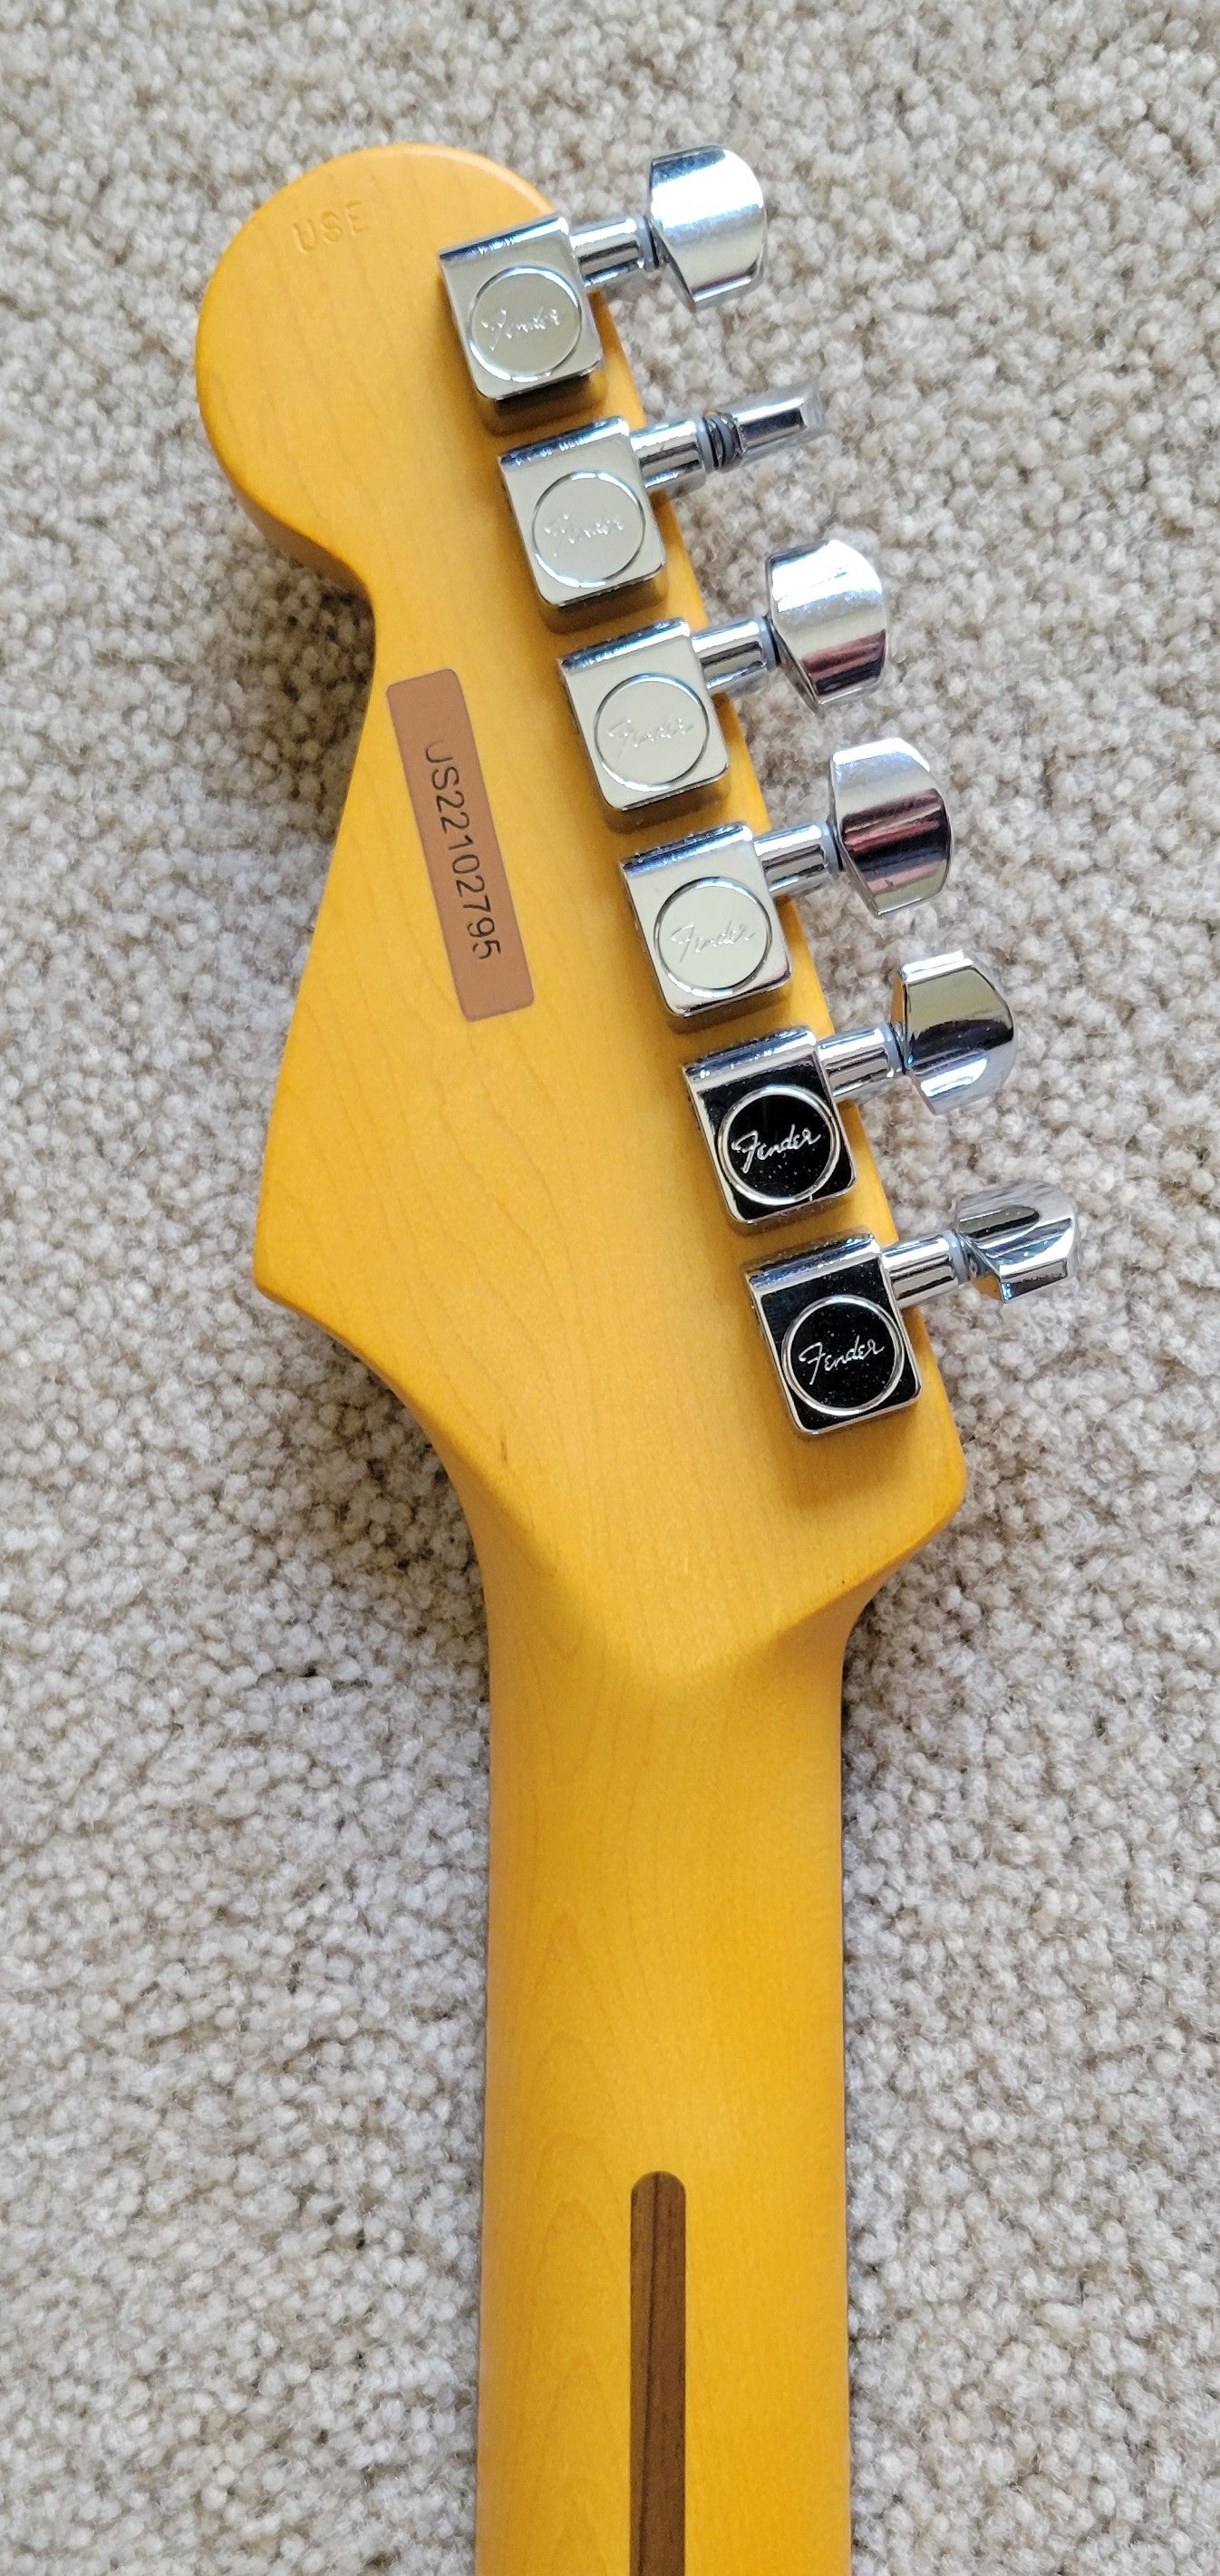 Fender American Professional II Stratocaster Electric Guitar, Dark Night, Deluxe Molded Hardshell Case